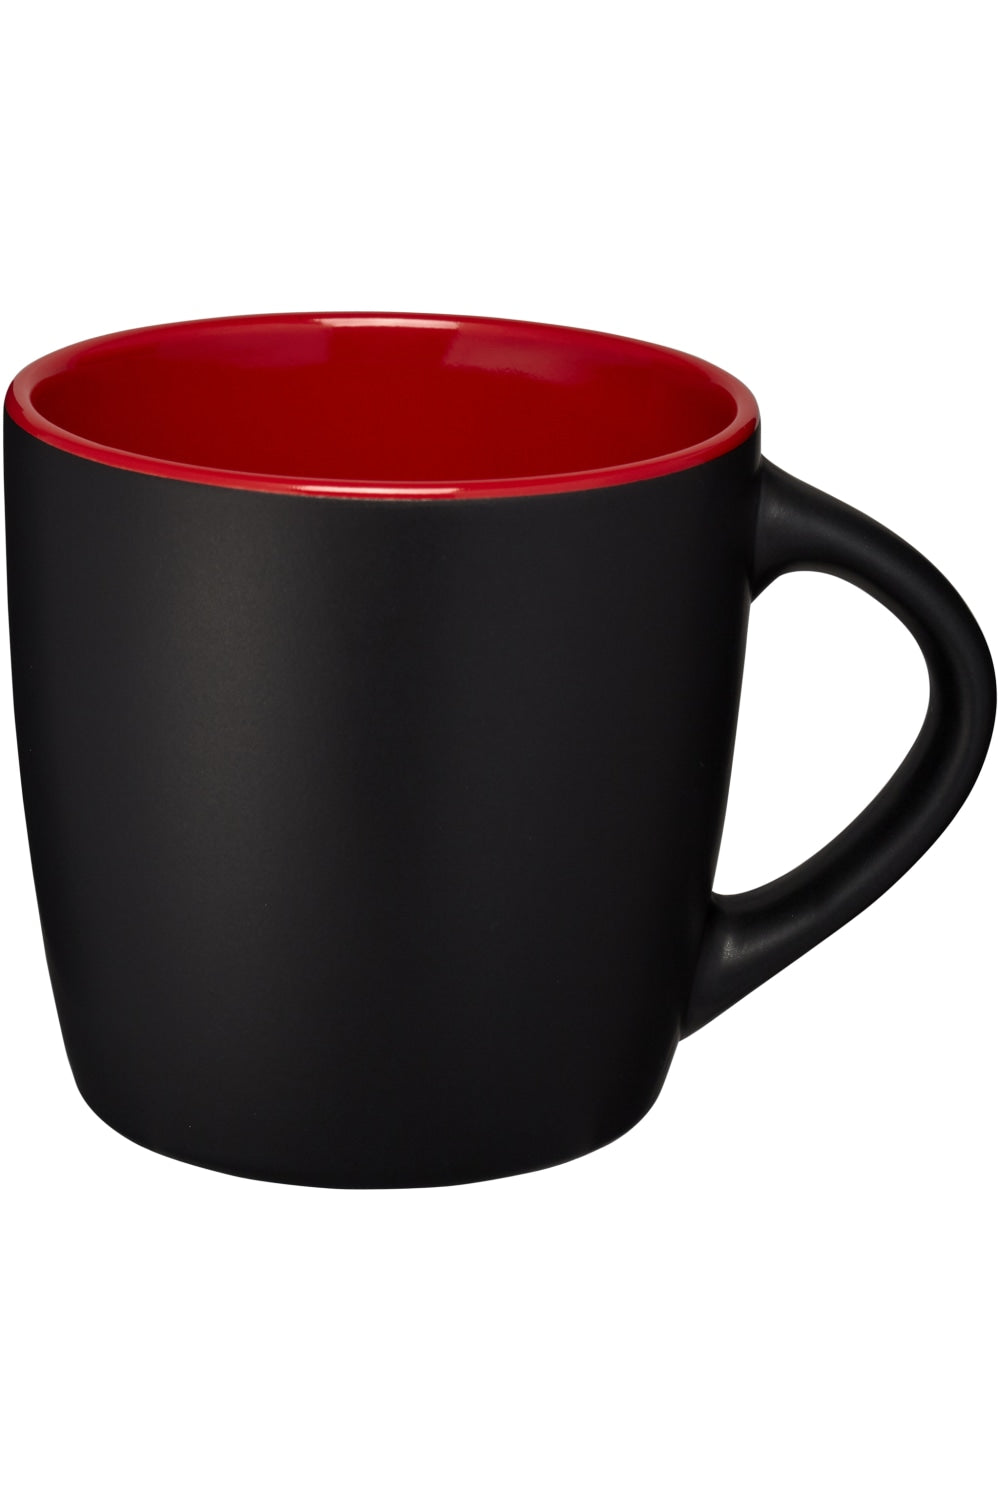 Bullet Riviera Ceramic Mug (Solid Black/Red) (3.3 x 3.5 inches)